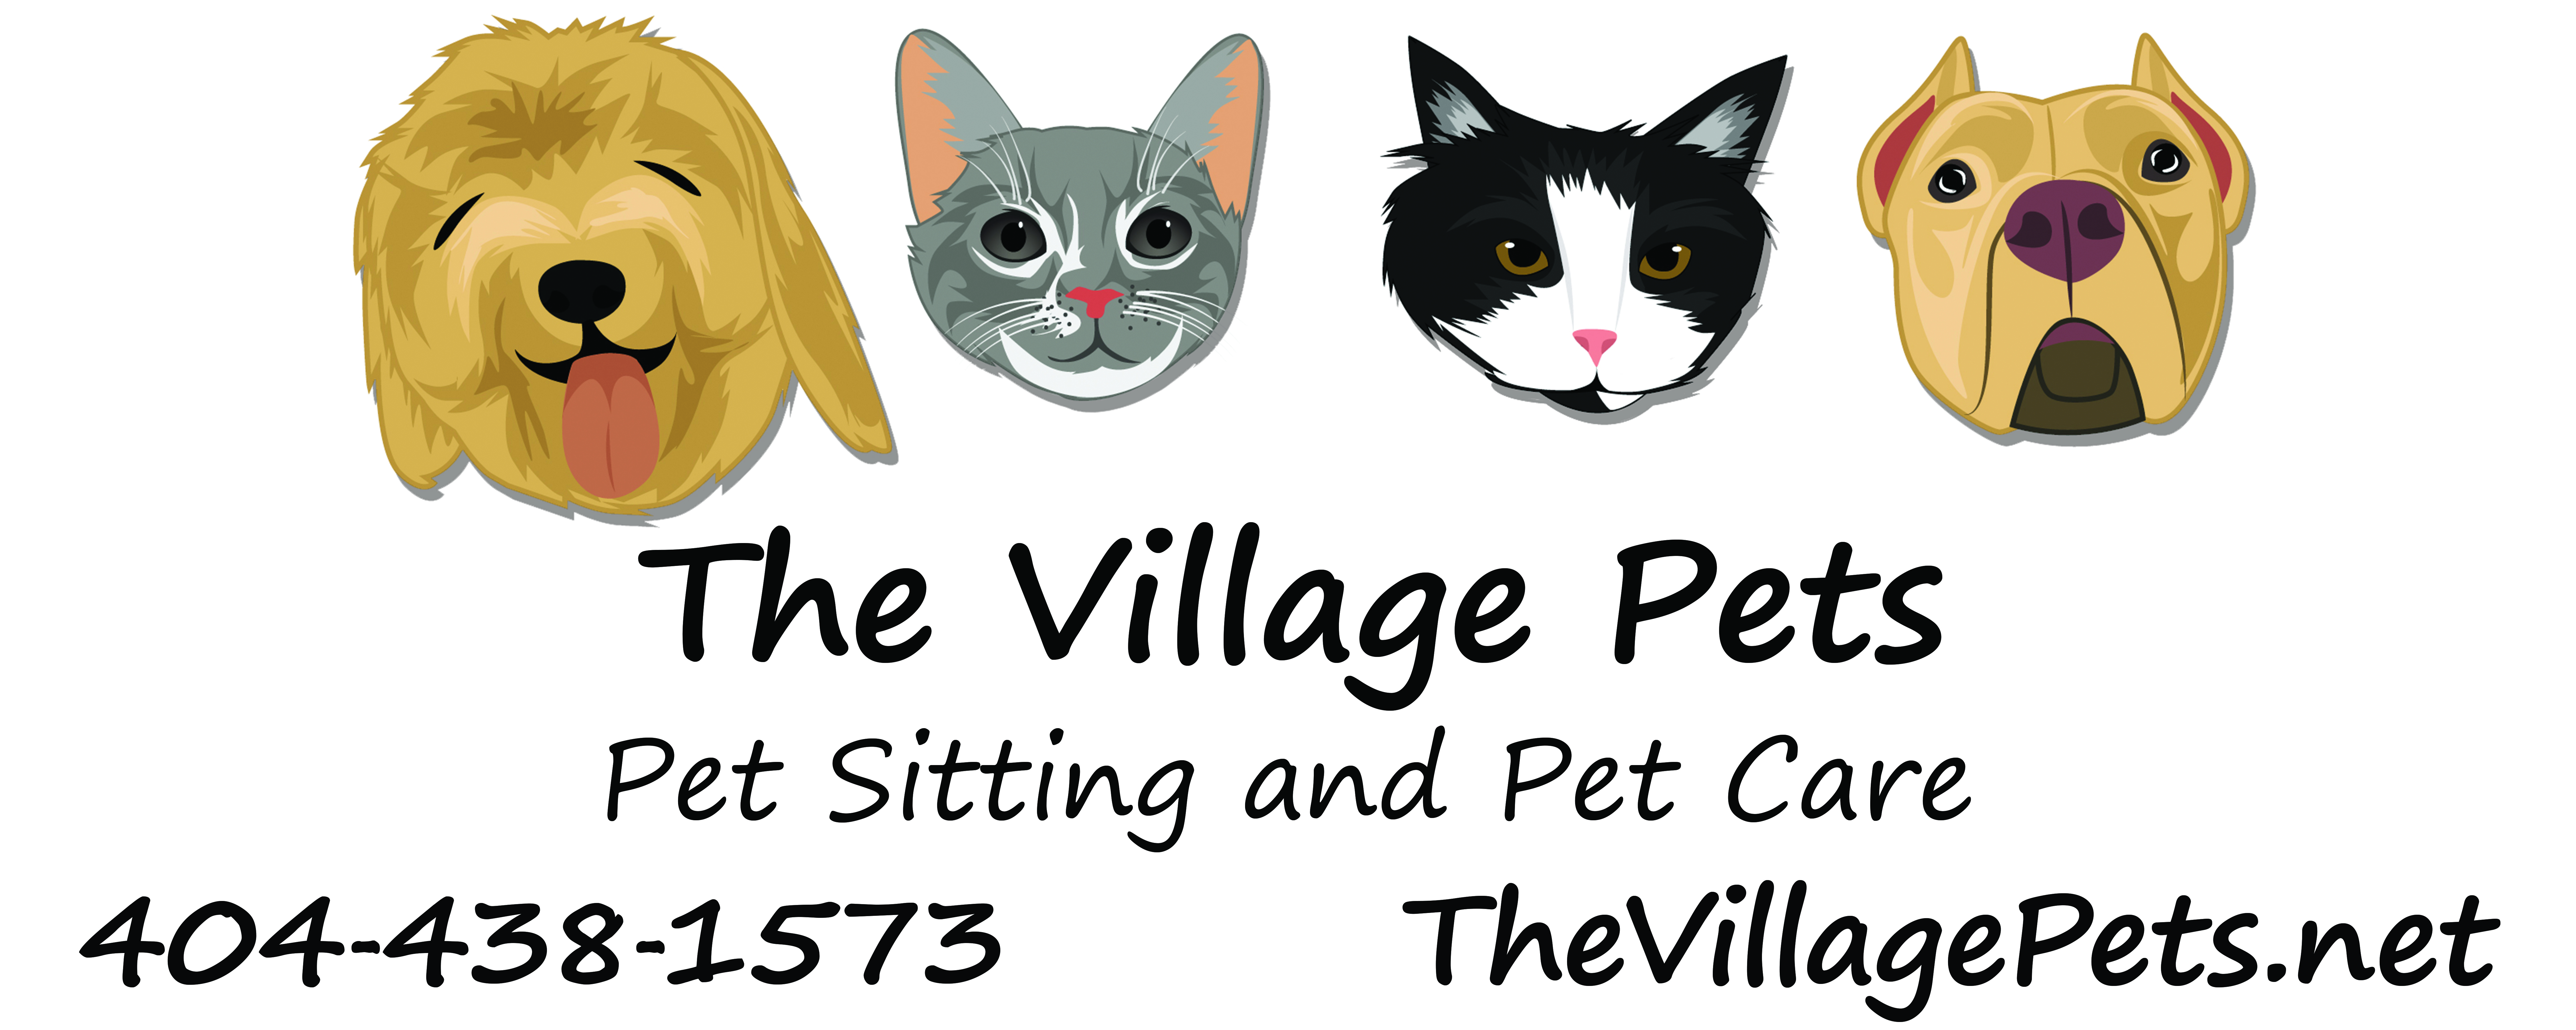 The Village Pets, Pet Sitting and Pet Care, LLC